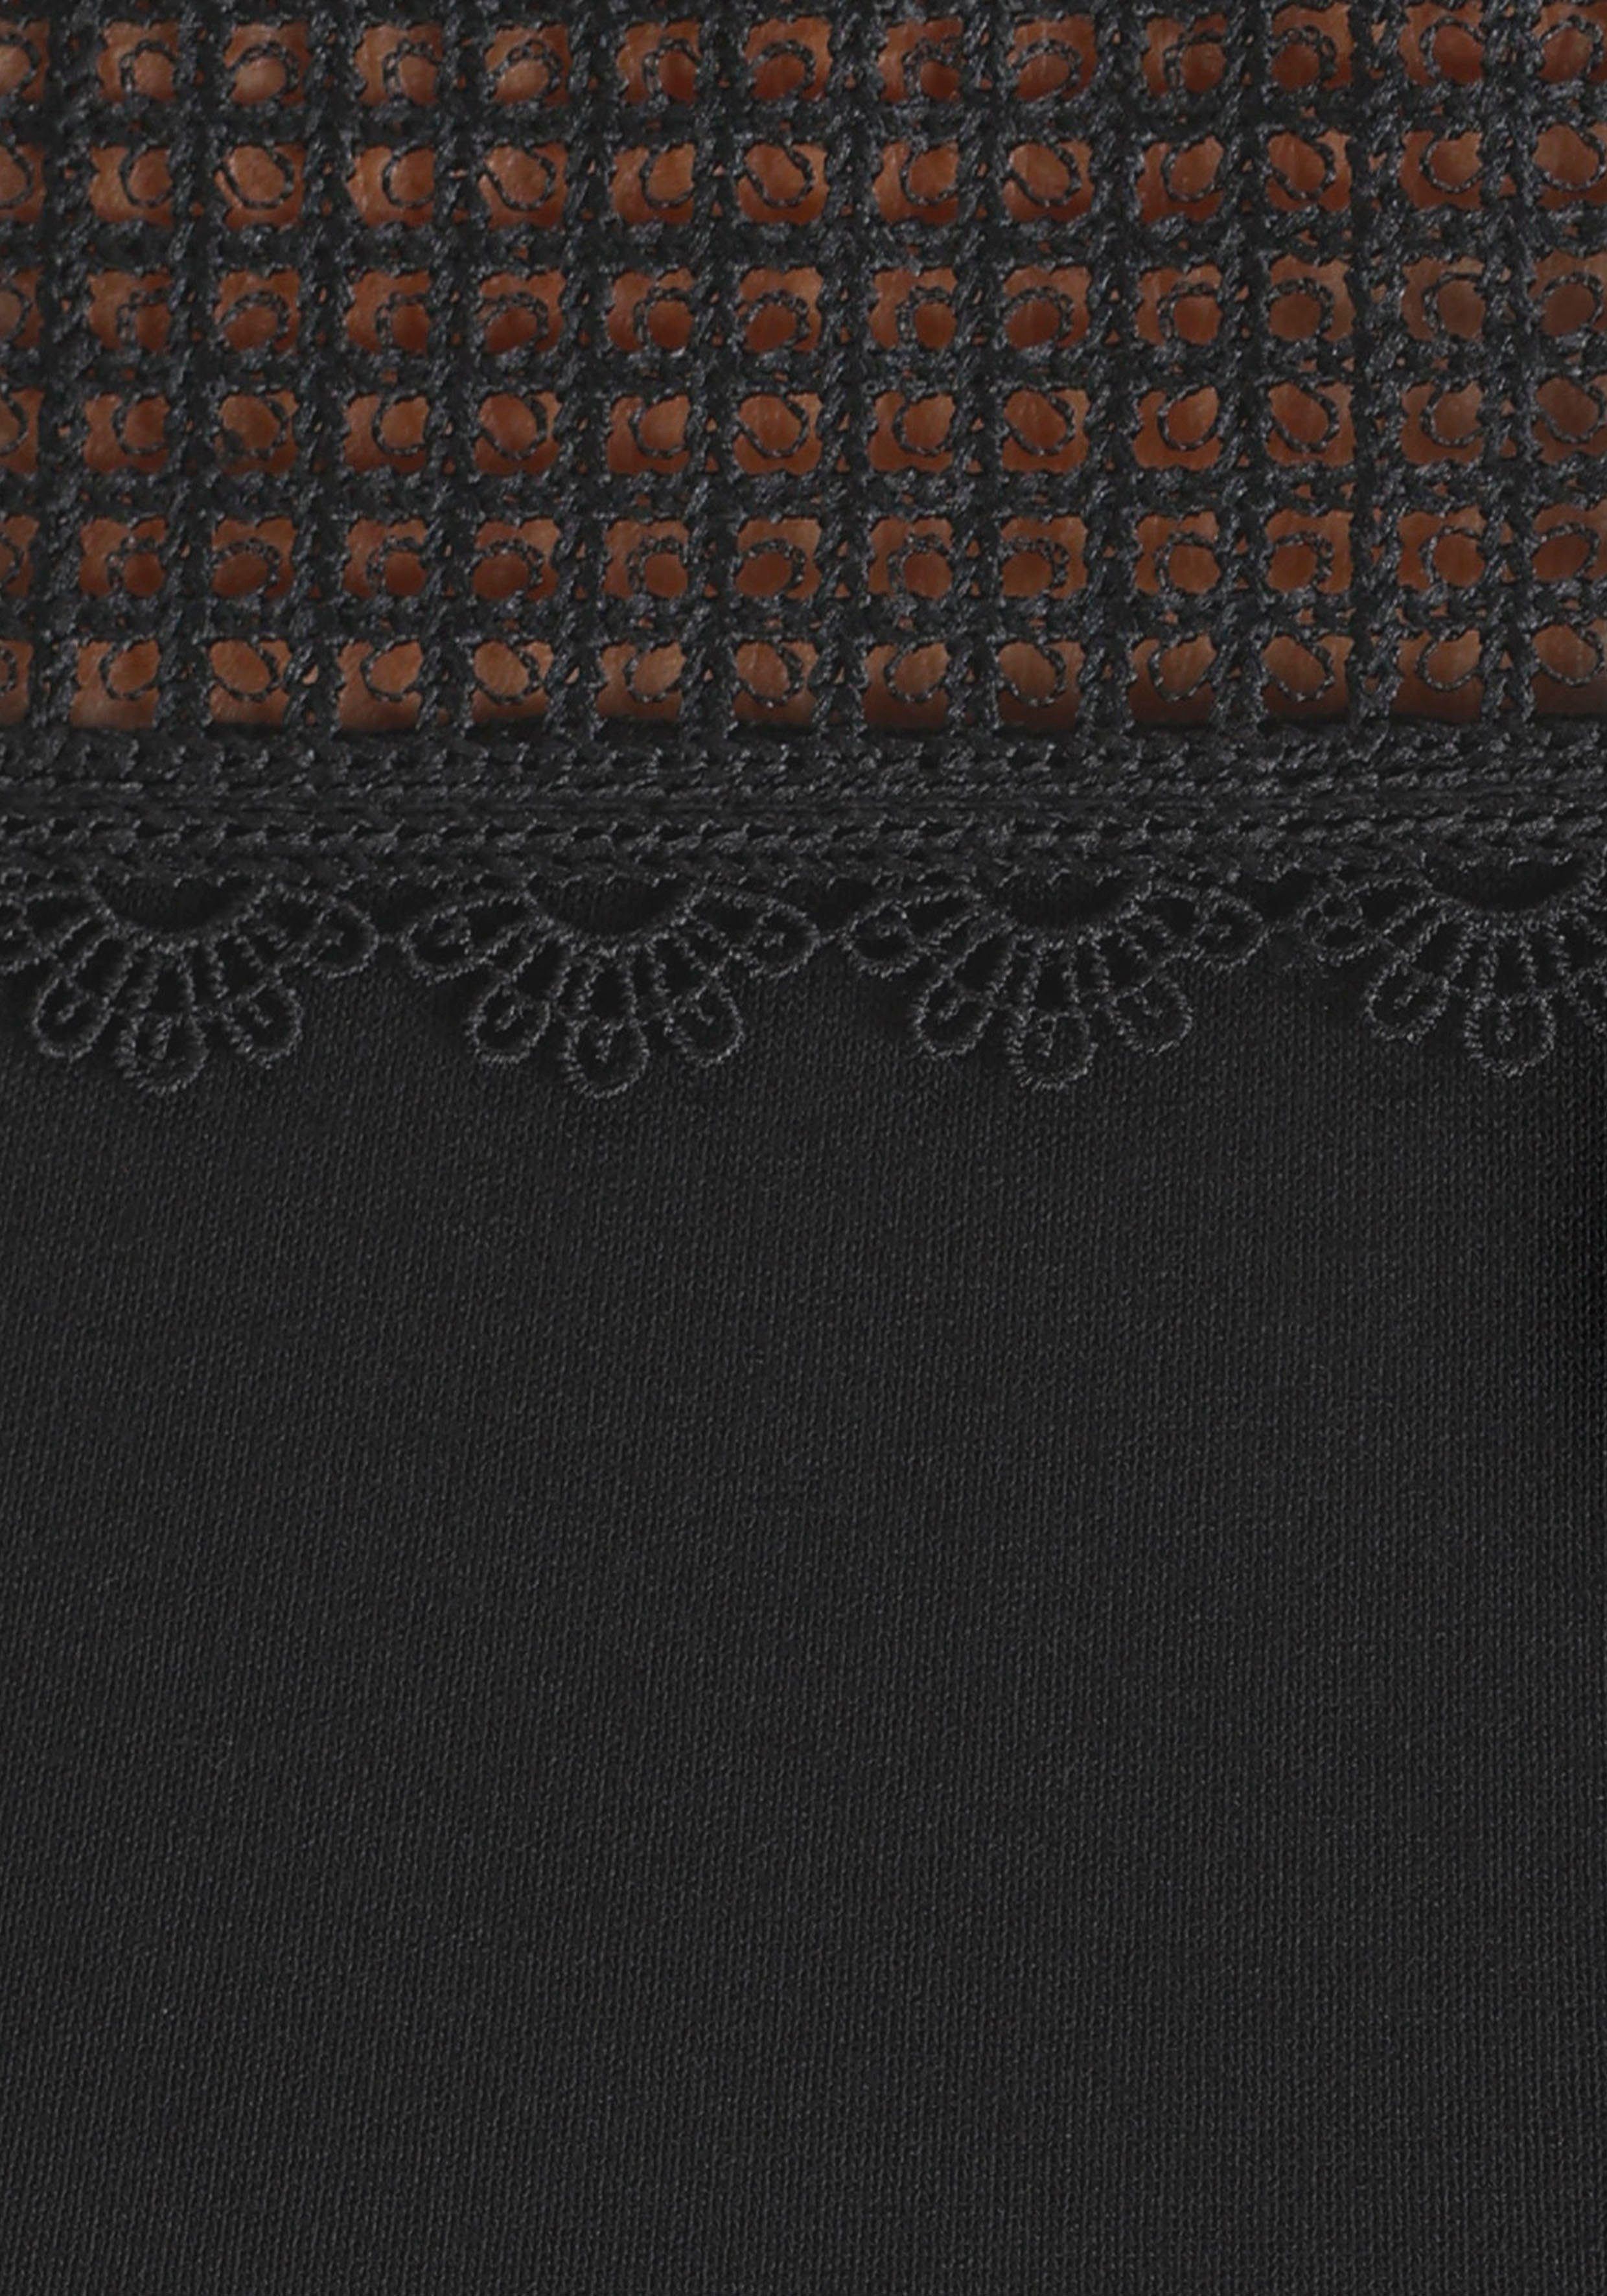 Crochet-Einsatz mit Melrose Netzshirt